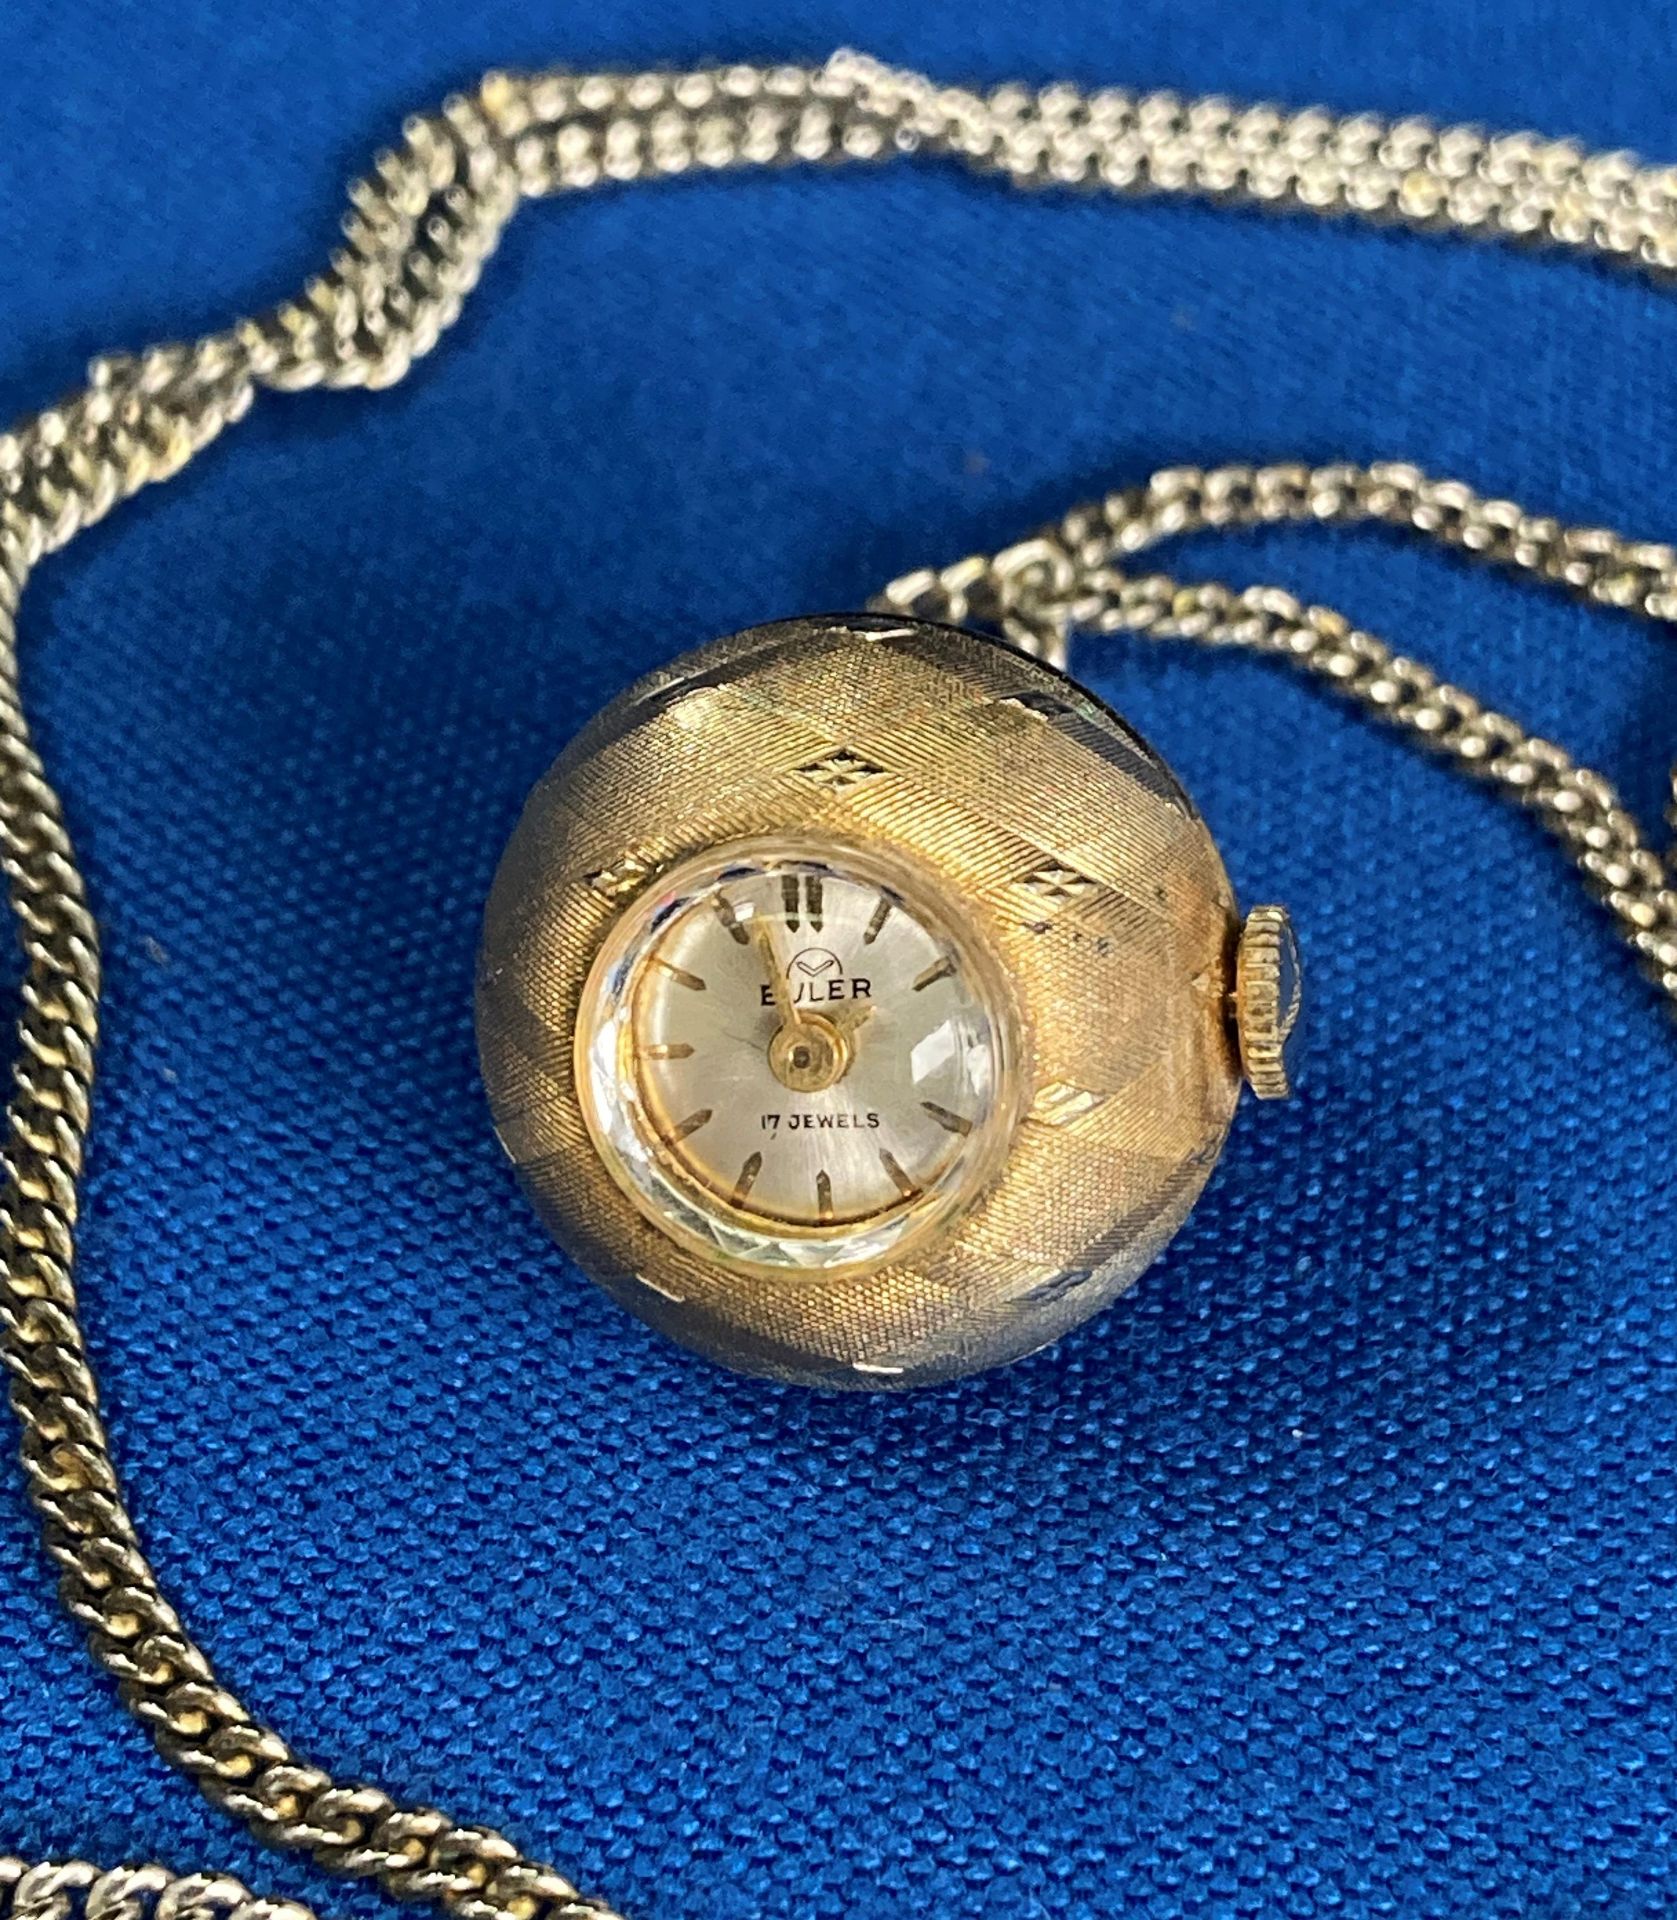 A vintage BULER pendant watch in original case (saleroom location: S3 GC3) - Image 2 of 4